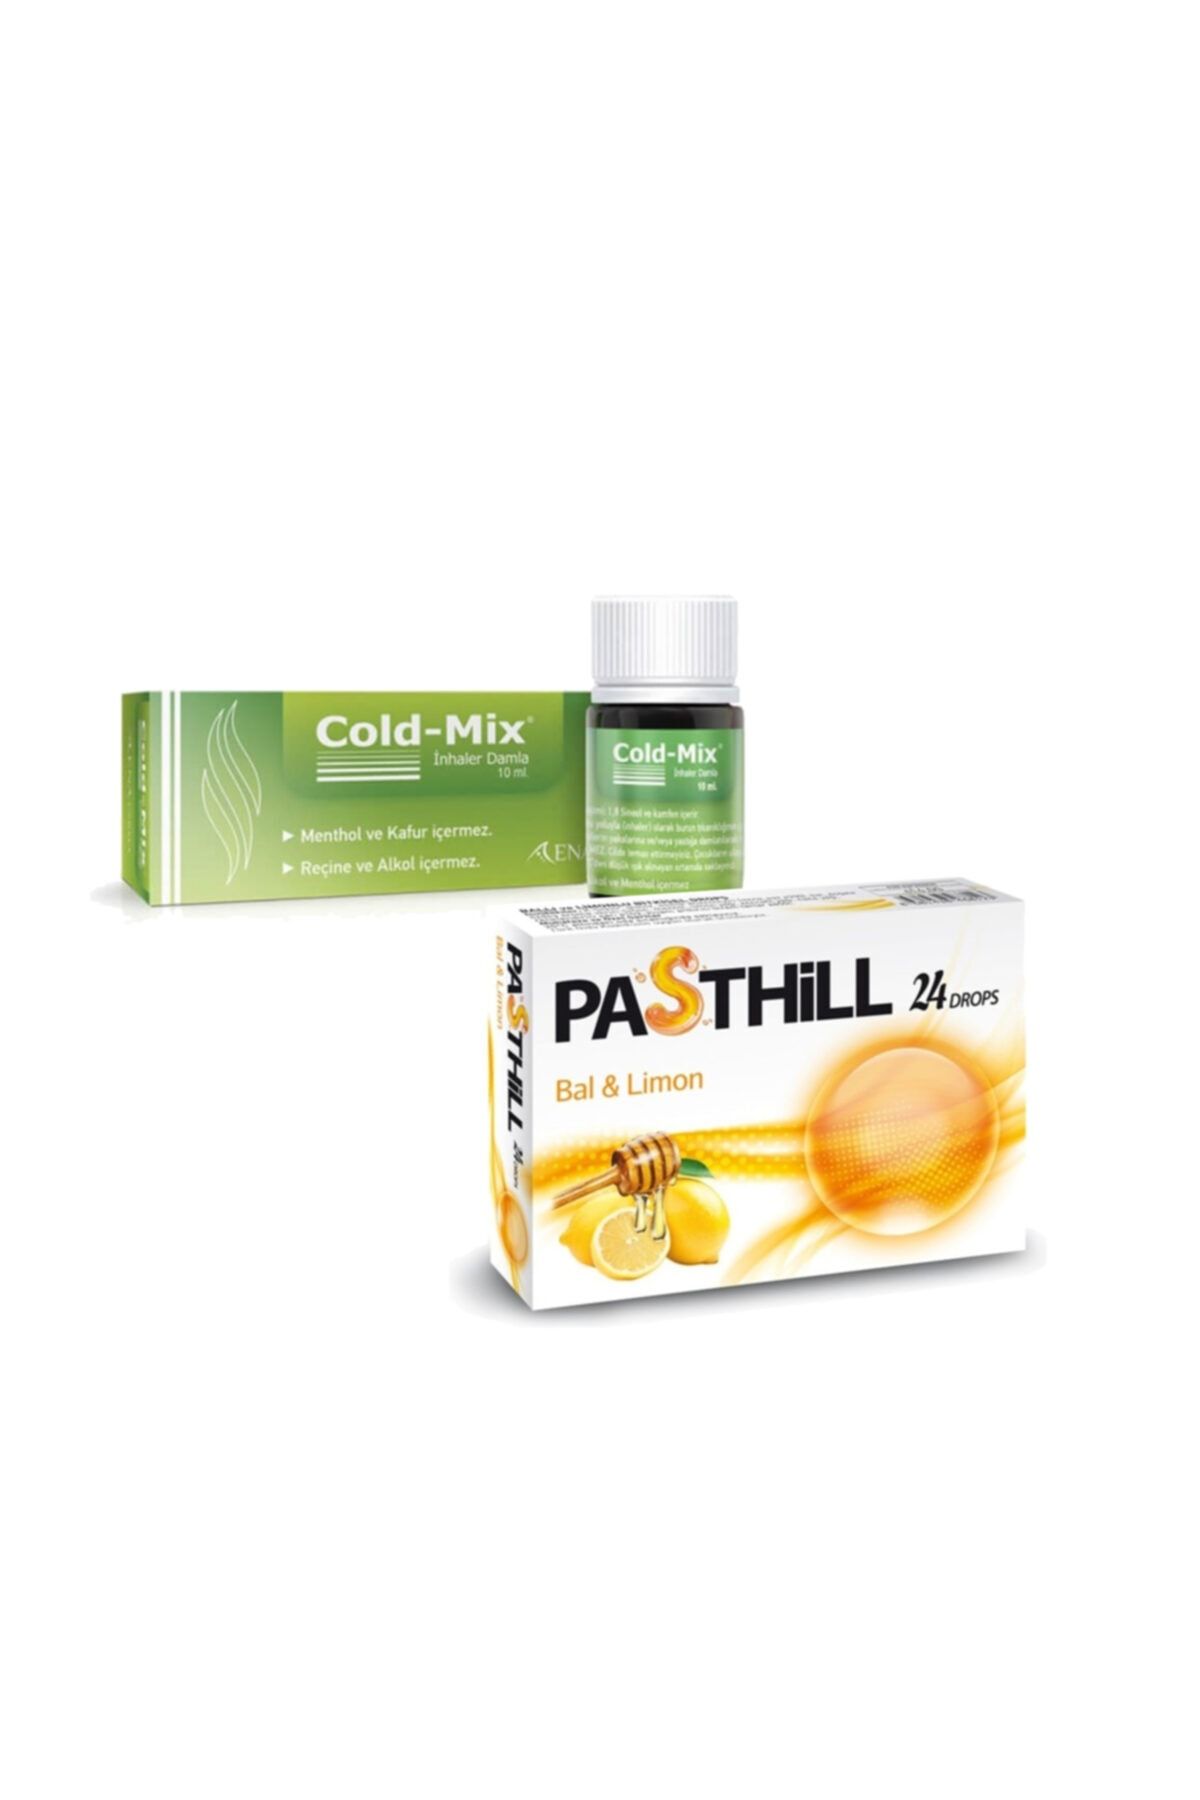 Cold-Mix Inhaler 10 Ml Damla + Pasthill 24 Drops Hediye